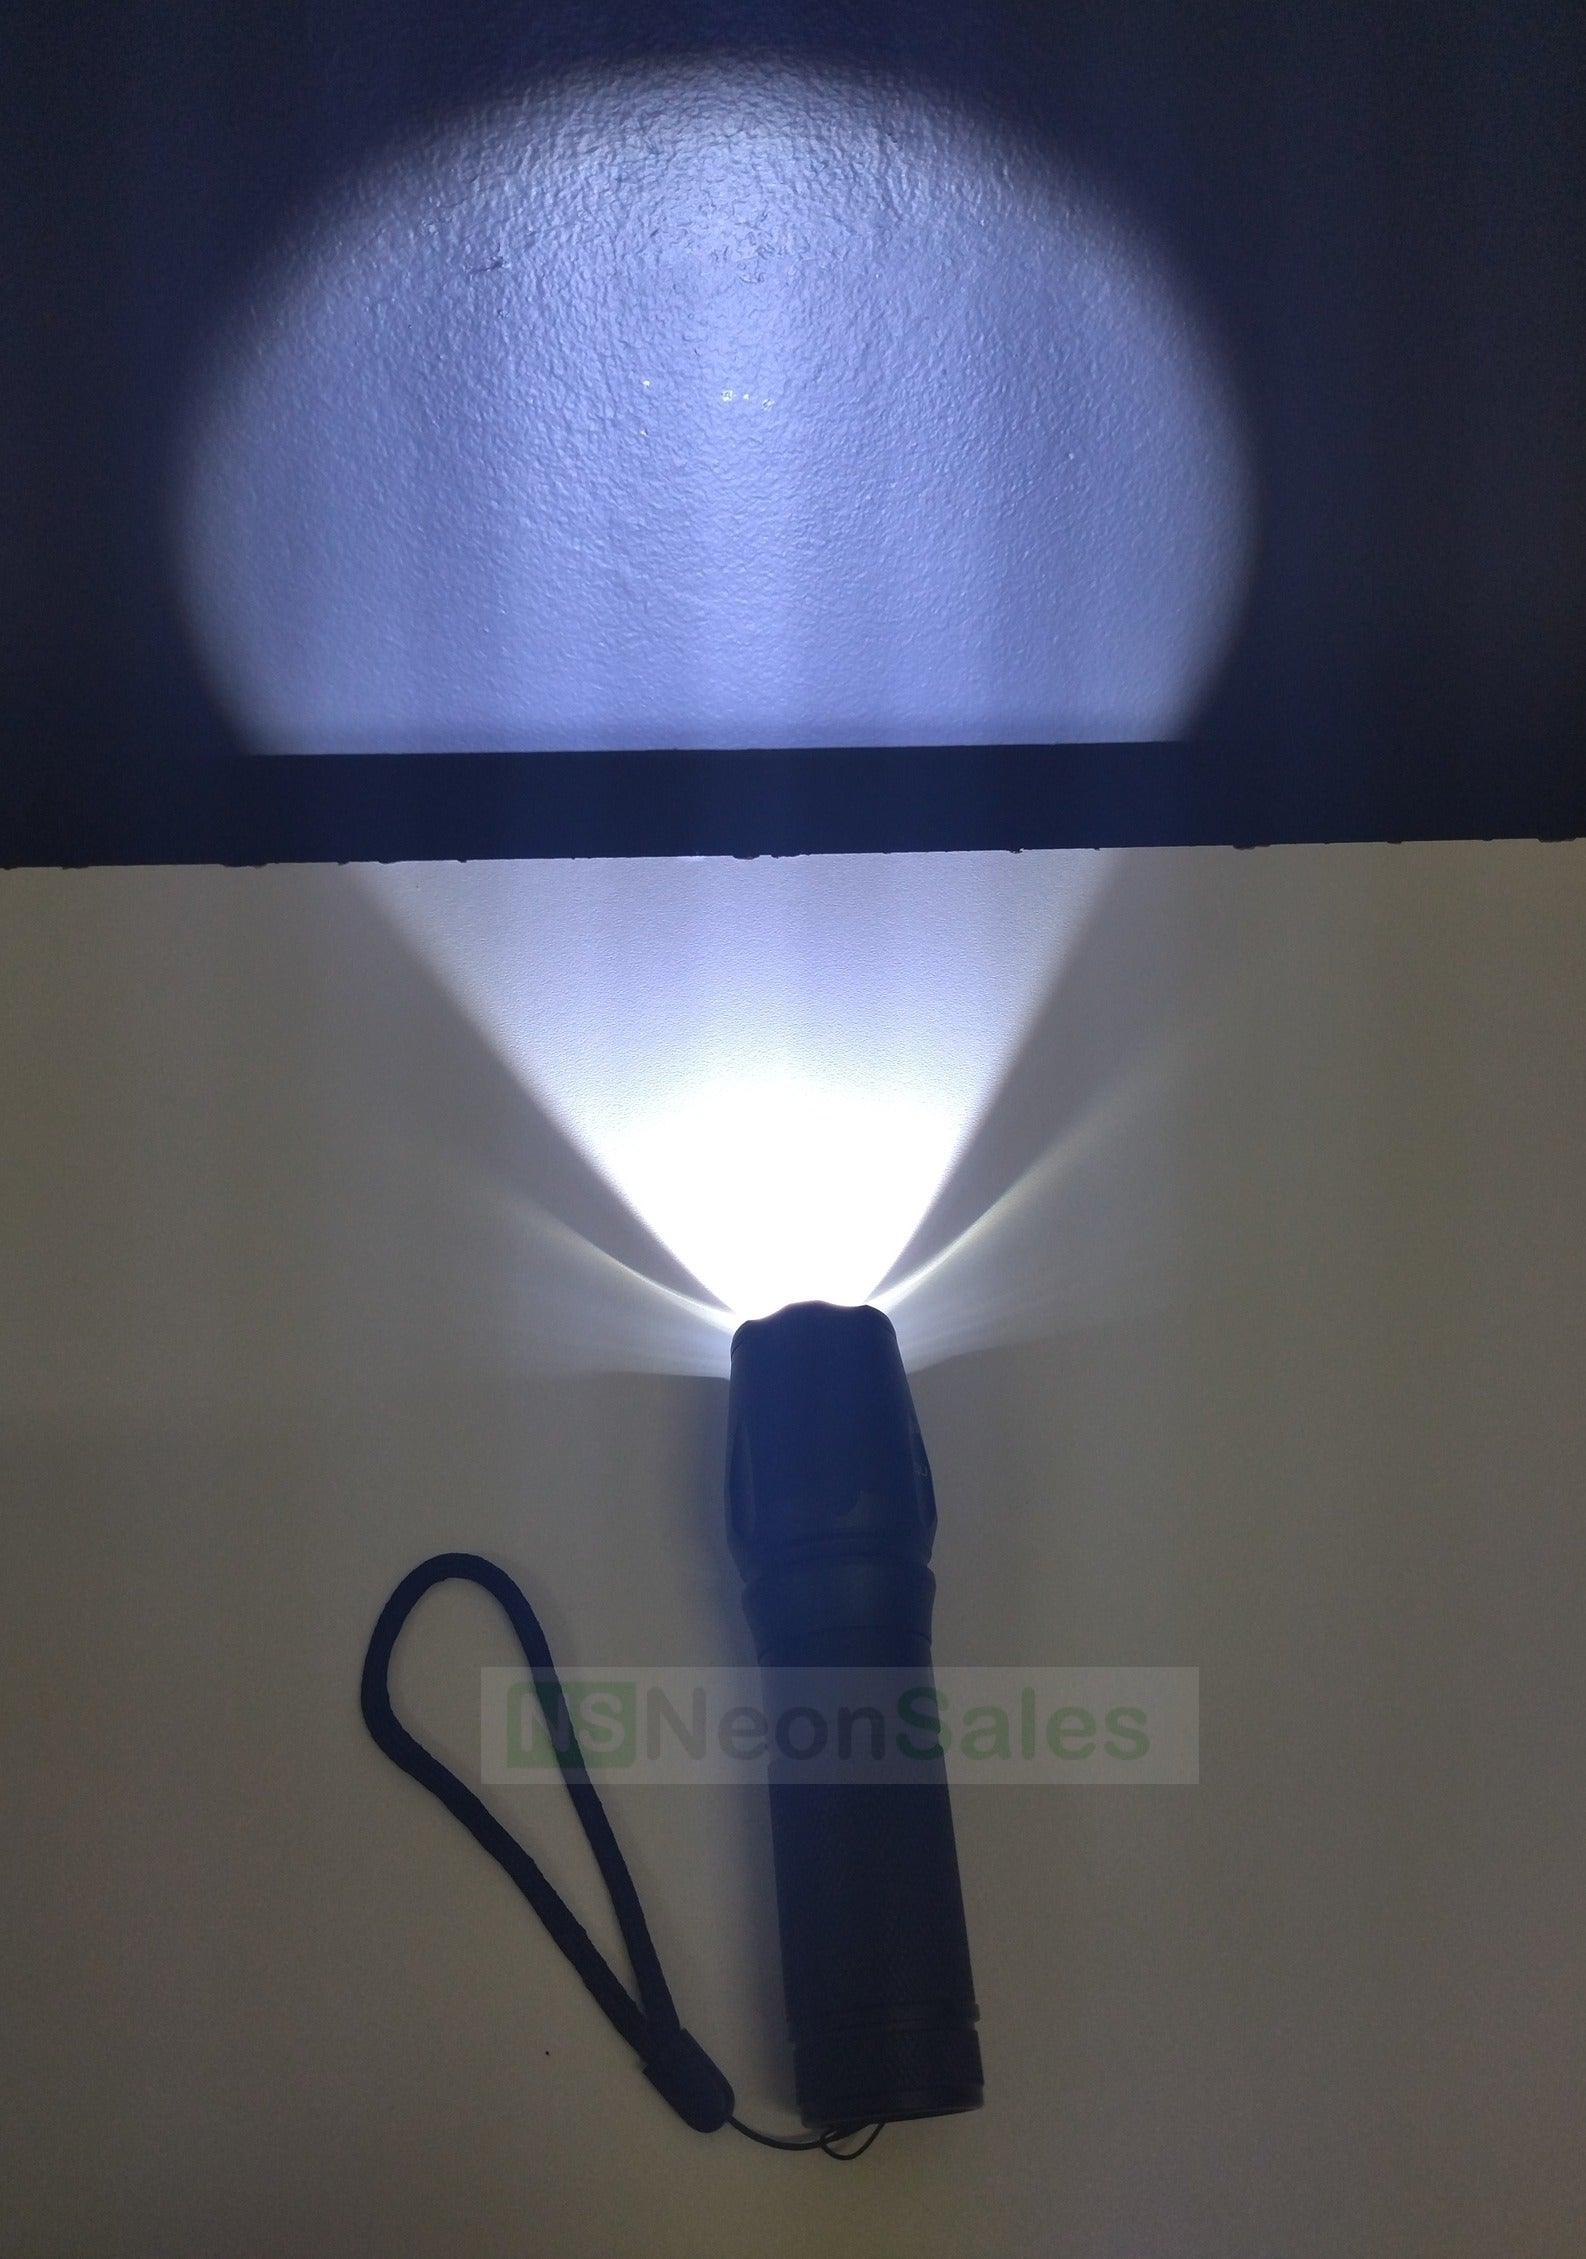 ANDOWL RECHARGEABLE GLARE FLASHLIGHT - Q-5104 - NeonSales